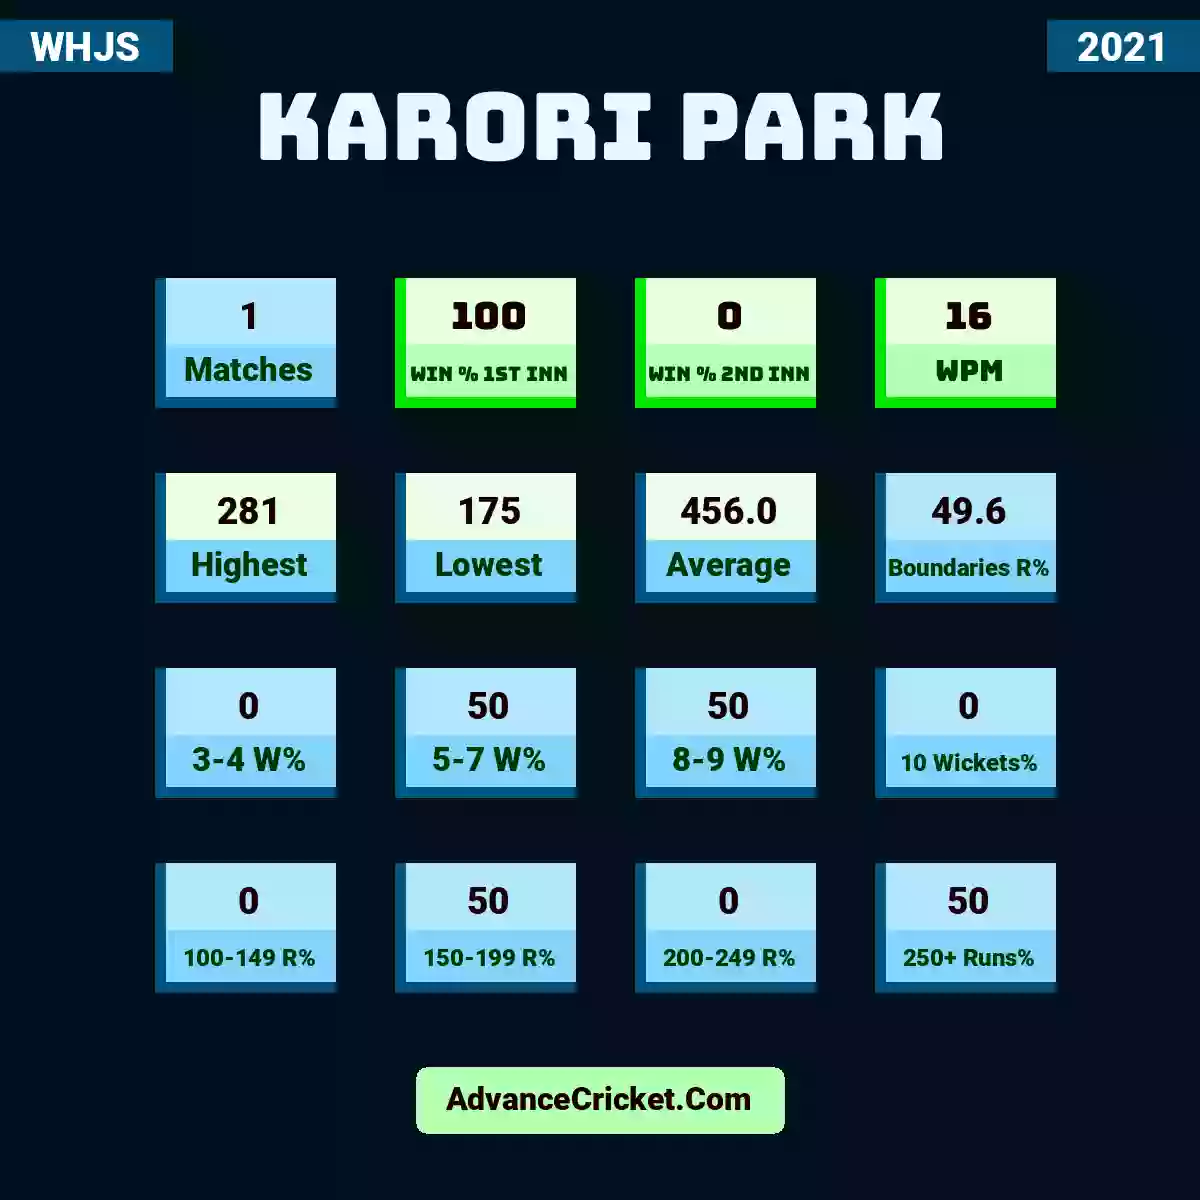 Image showing Karori Park with Matches: 1, Win % 1st Inn: 100, Win % 2nd Inn: 0, WPM: 16, Highest: 281, Lowest: 175, Average: 456.0, Boundaries R%: 49.6, 3-4 W%: 0, 5-7 W%: 50, 8-9 W%: 50, 10 Wickets%: 0, 100-149 R%: 0, 150-199 R%: 50, 200-249 R%: 0, 250+ Runs%: 50.